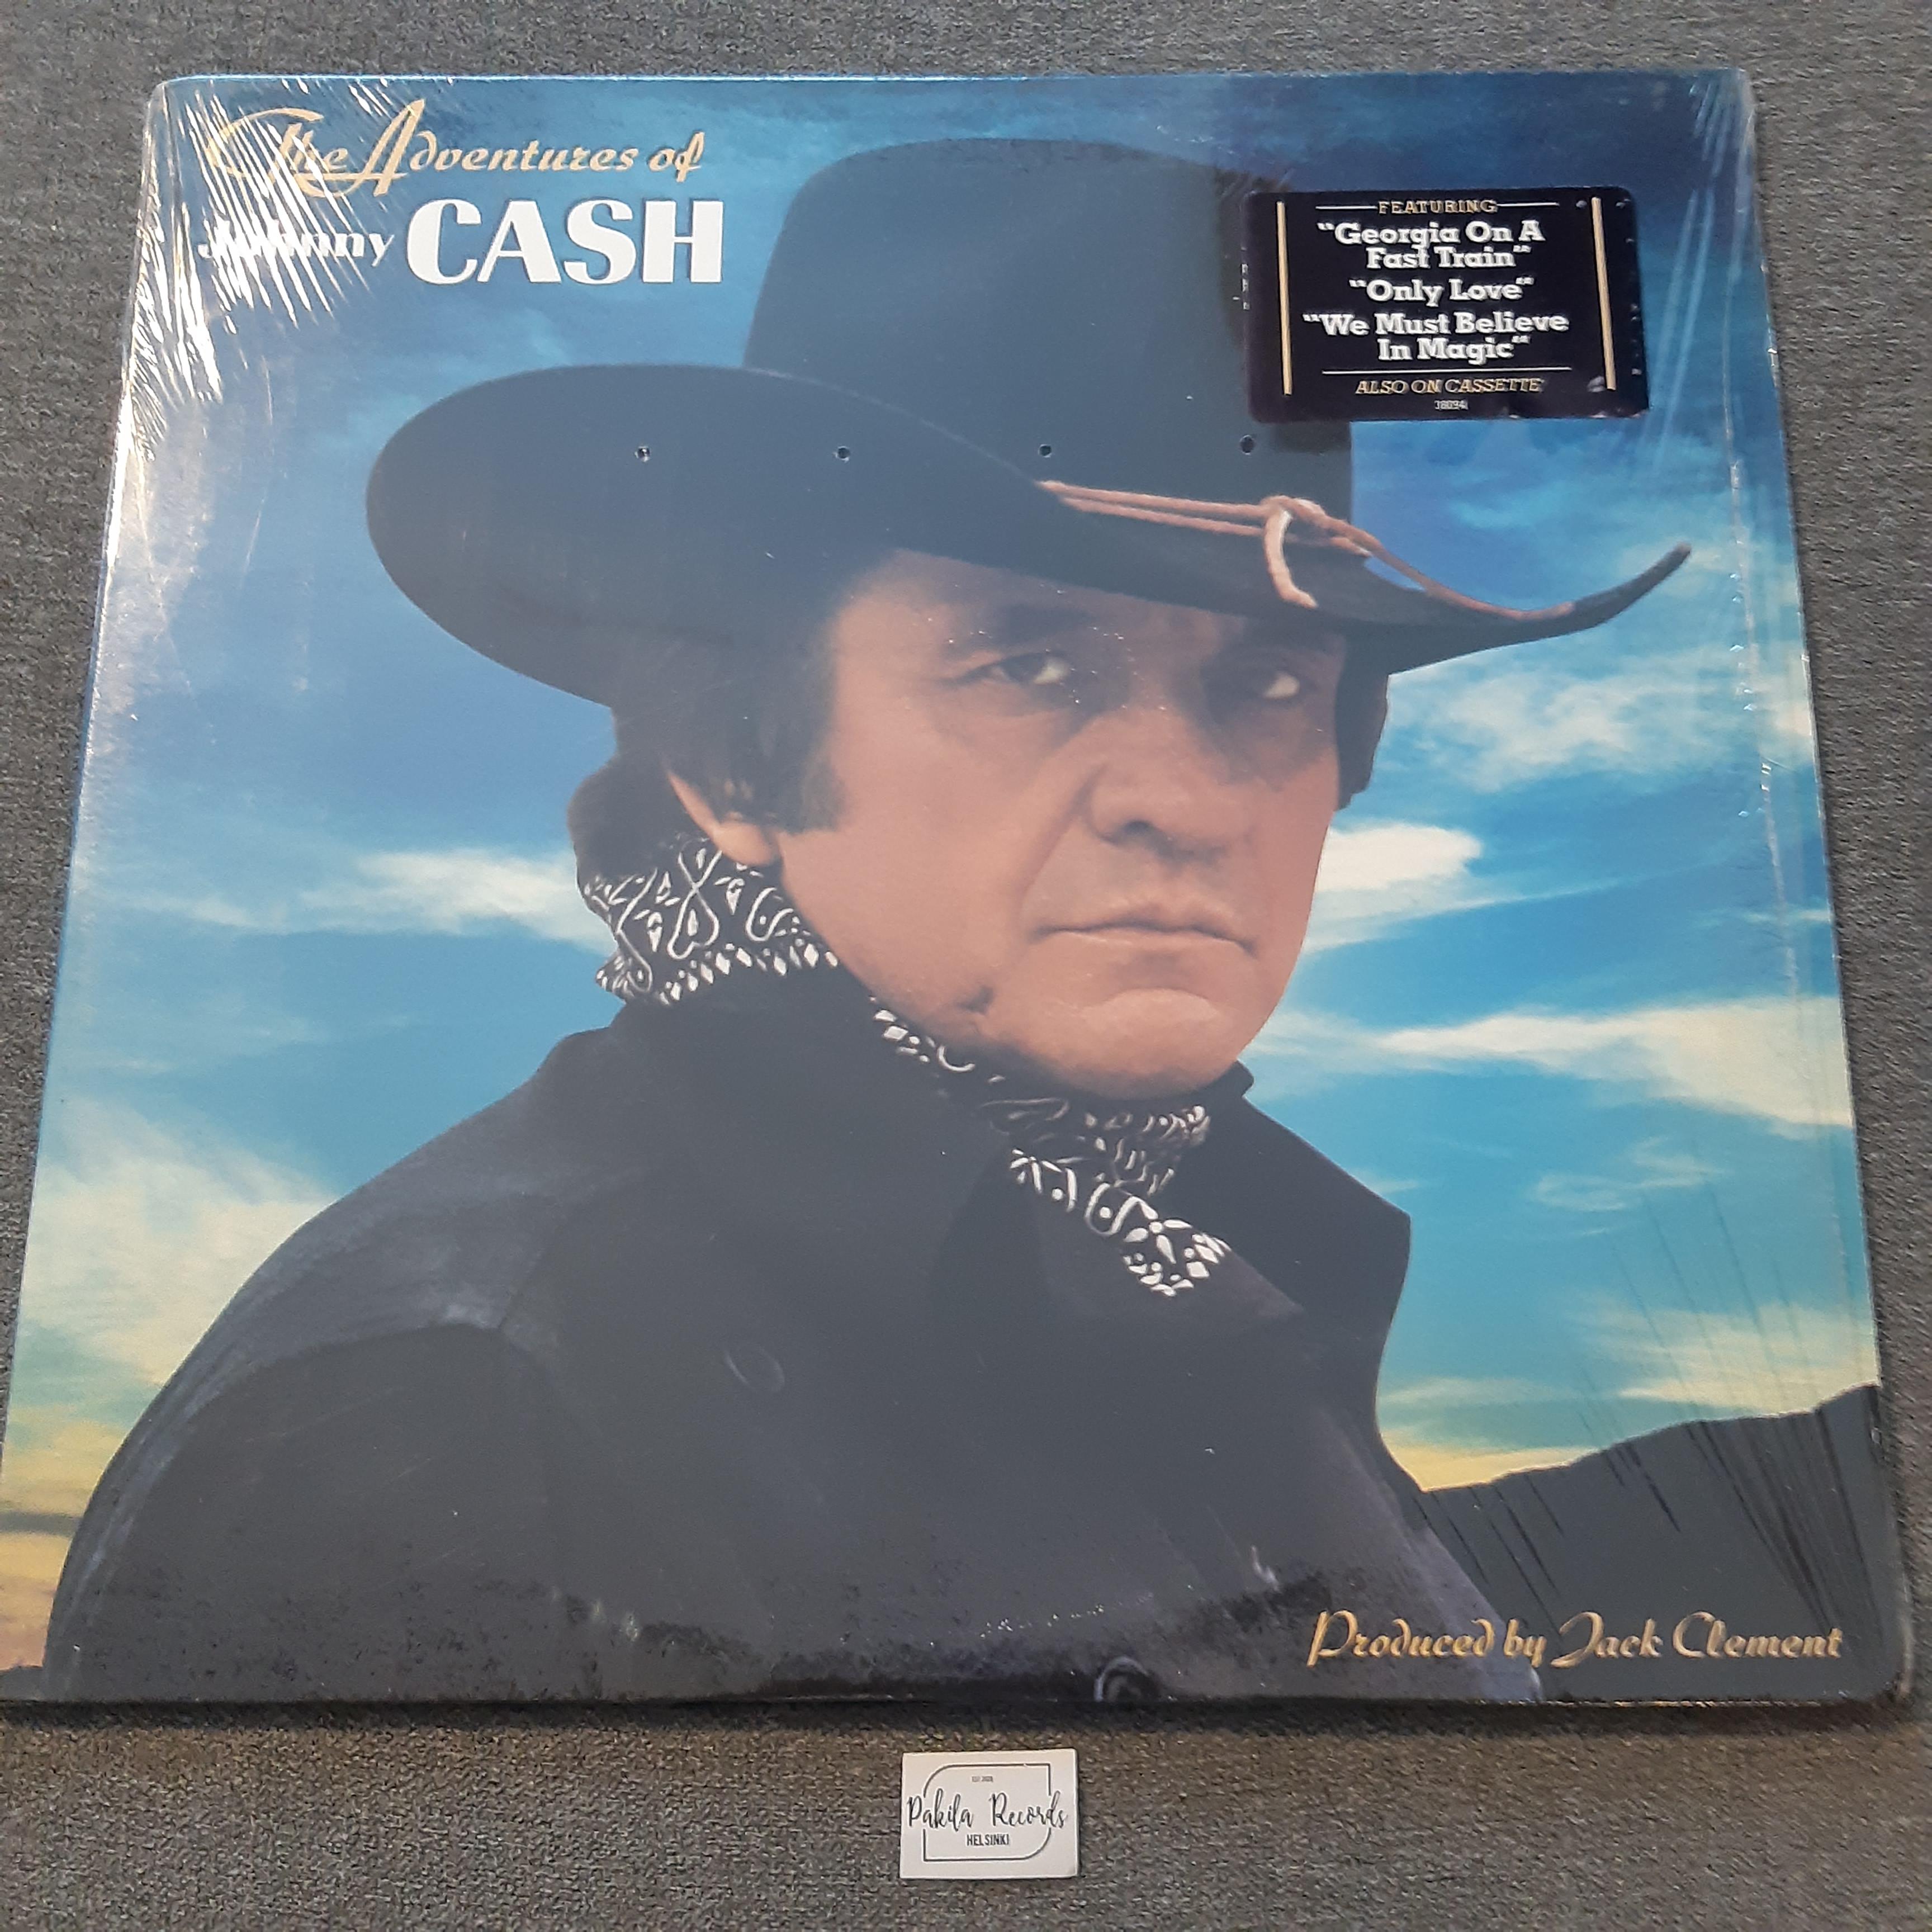 Johnny Cash - The Adventures Of Johnny Cash - LP (käytetty)